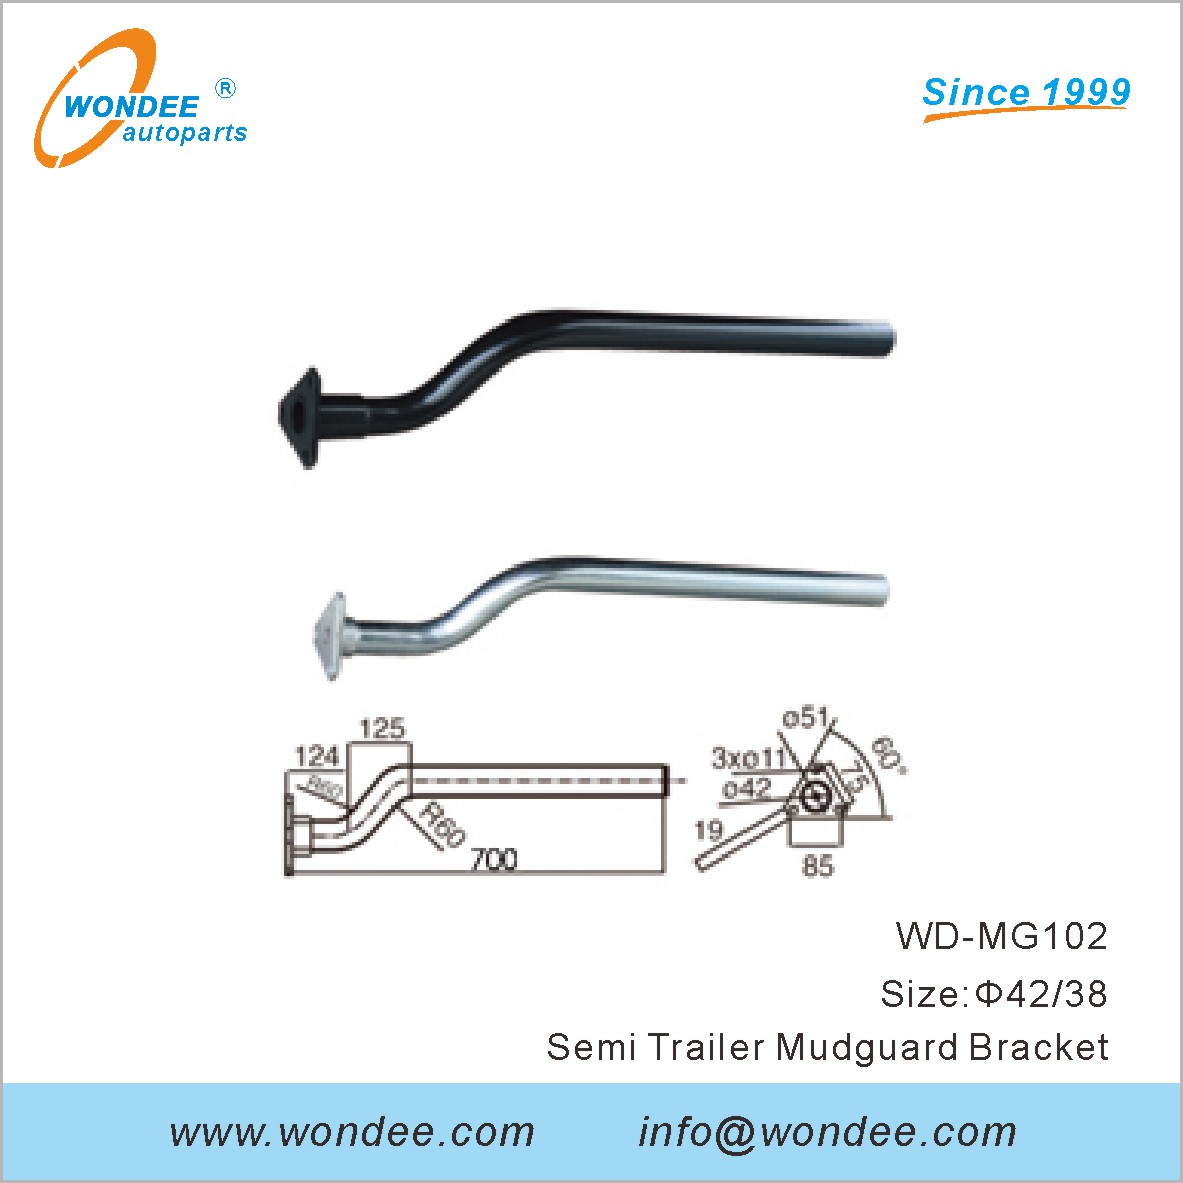 Mudguard bracket from WONDEE Autoparts (2)